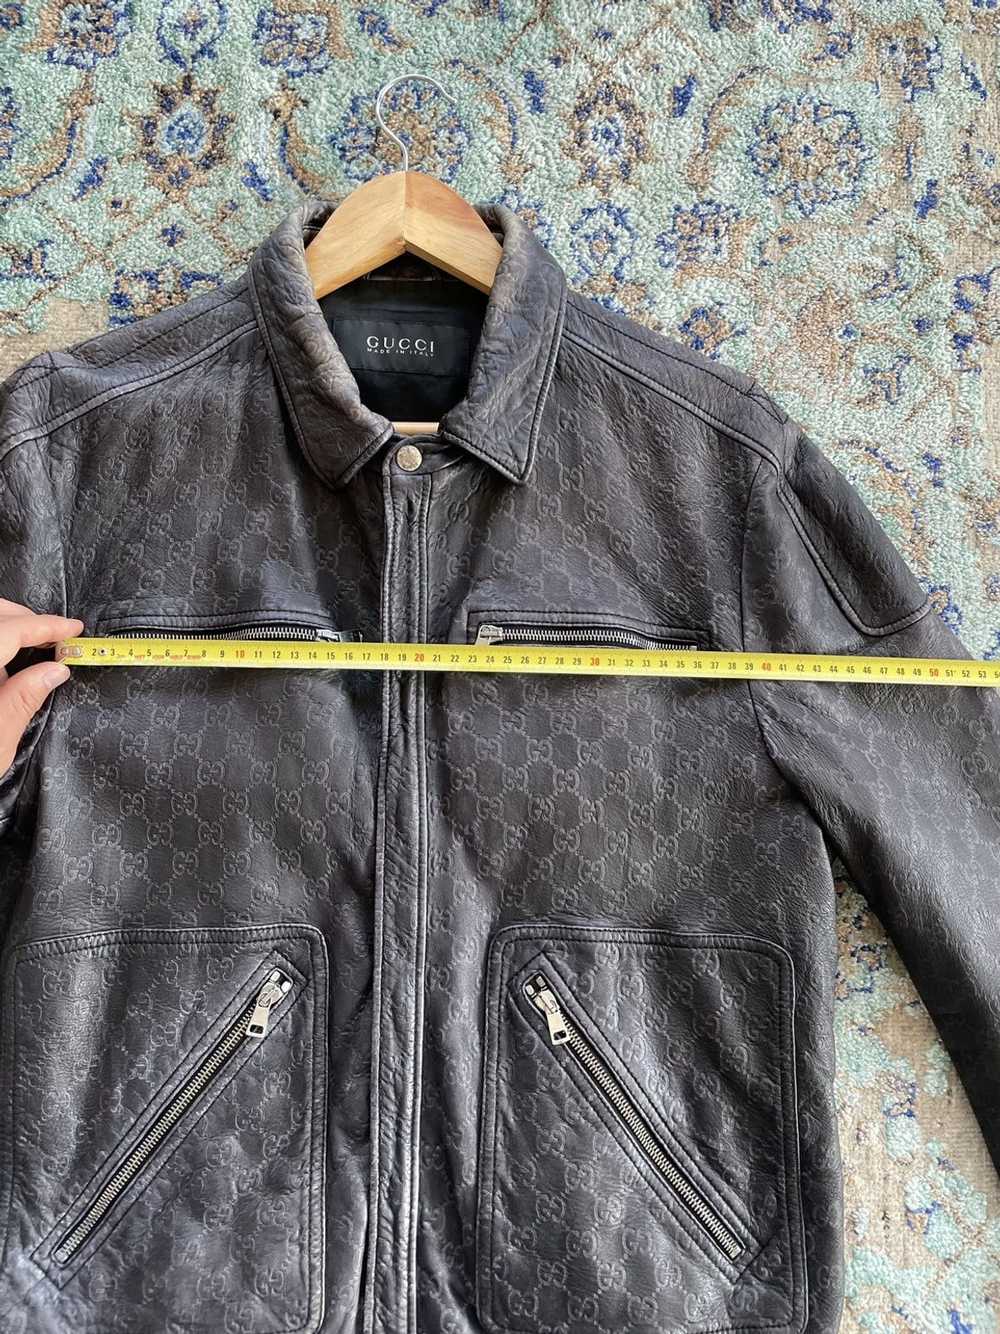 Gucci GG Monogram leather jacket - image 5